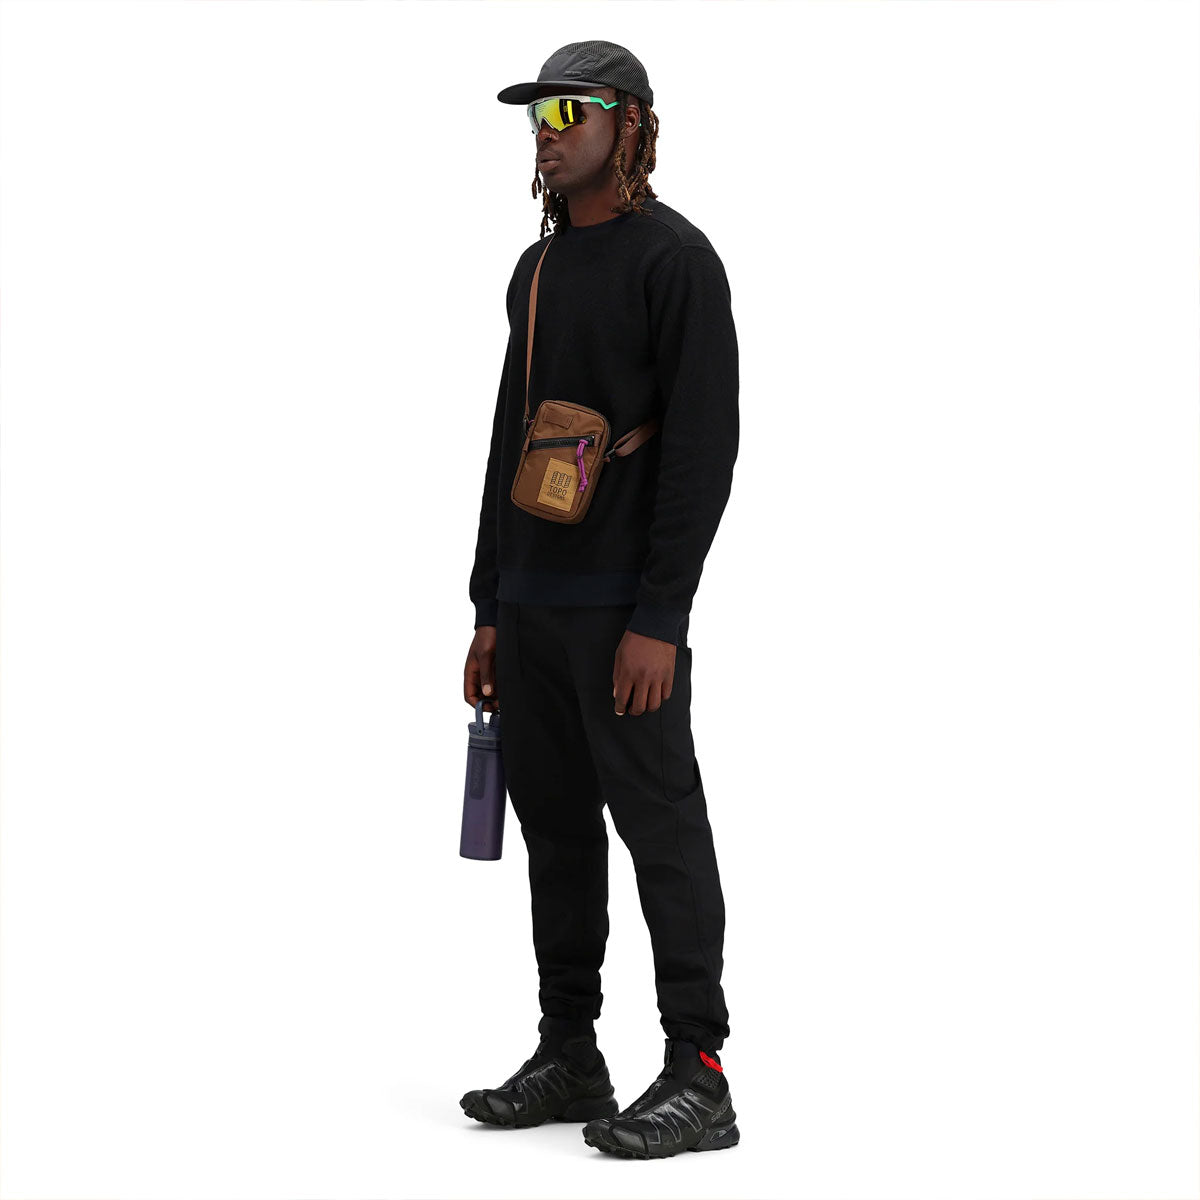 Topo Designs : Mini Shoulder Bag : Black